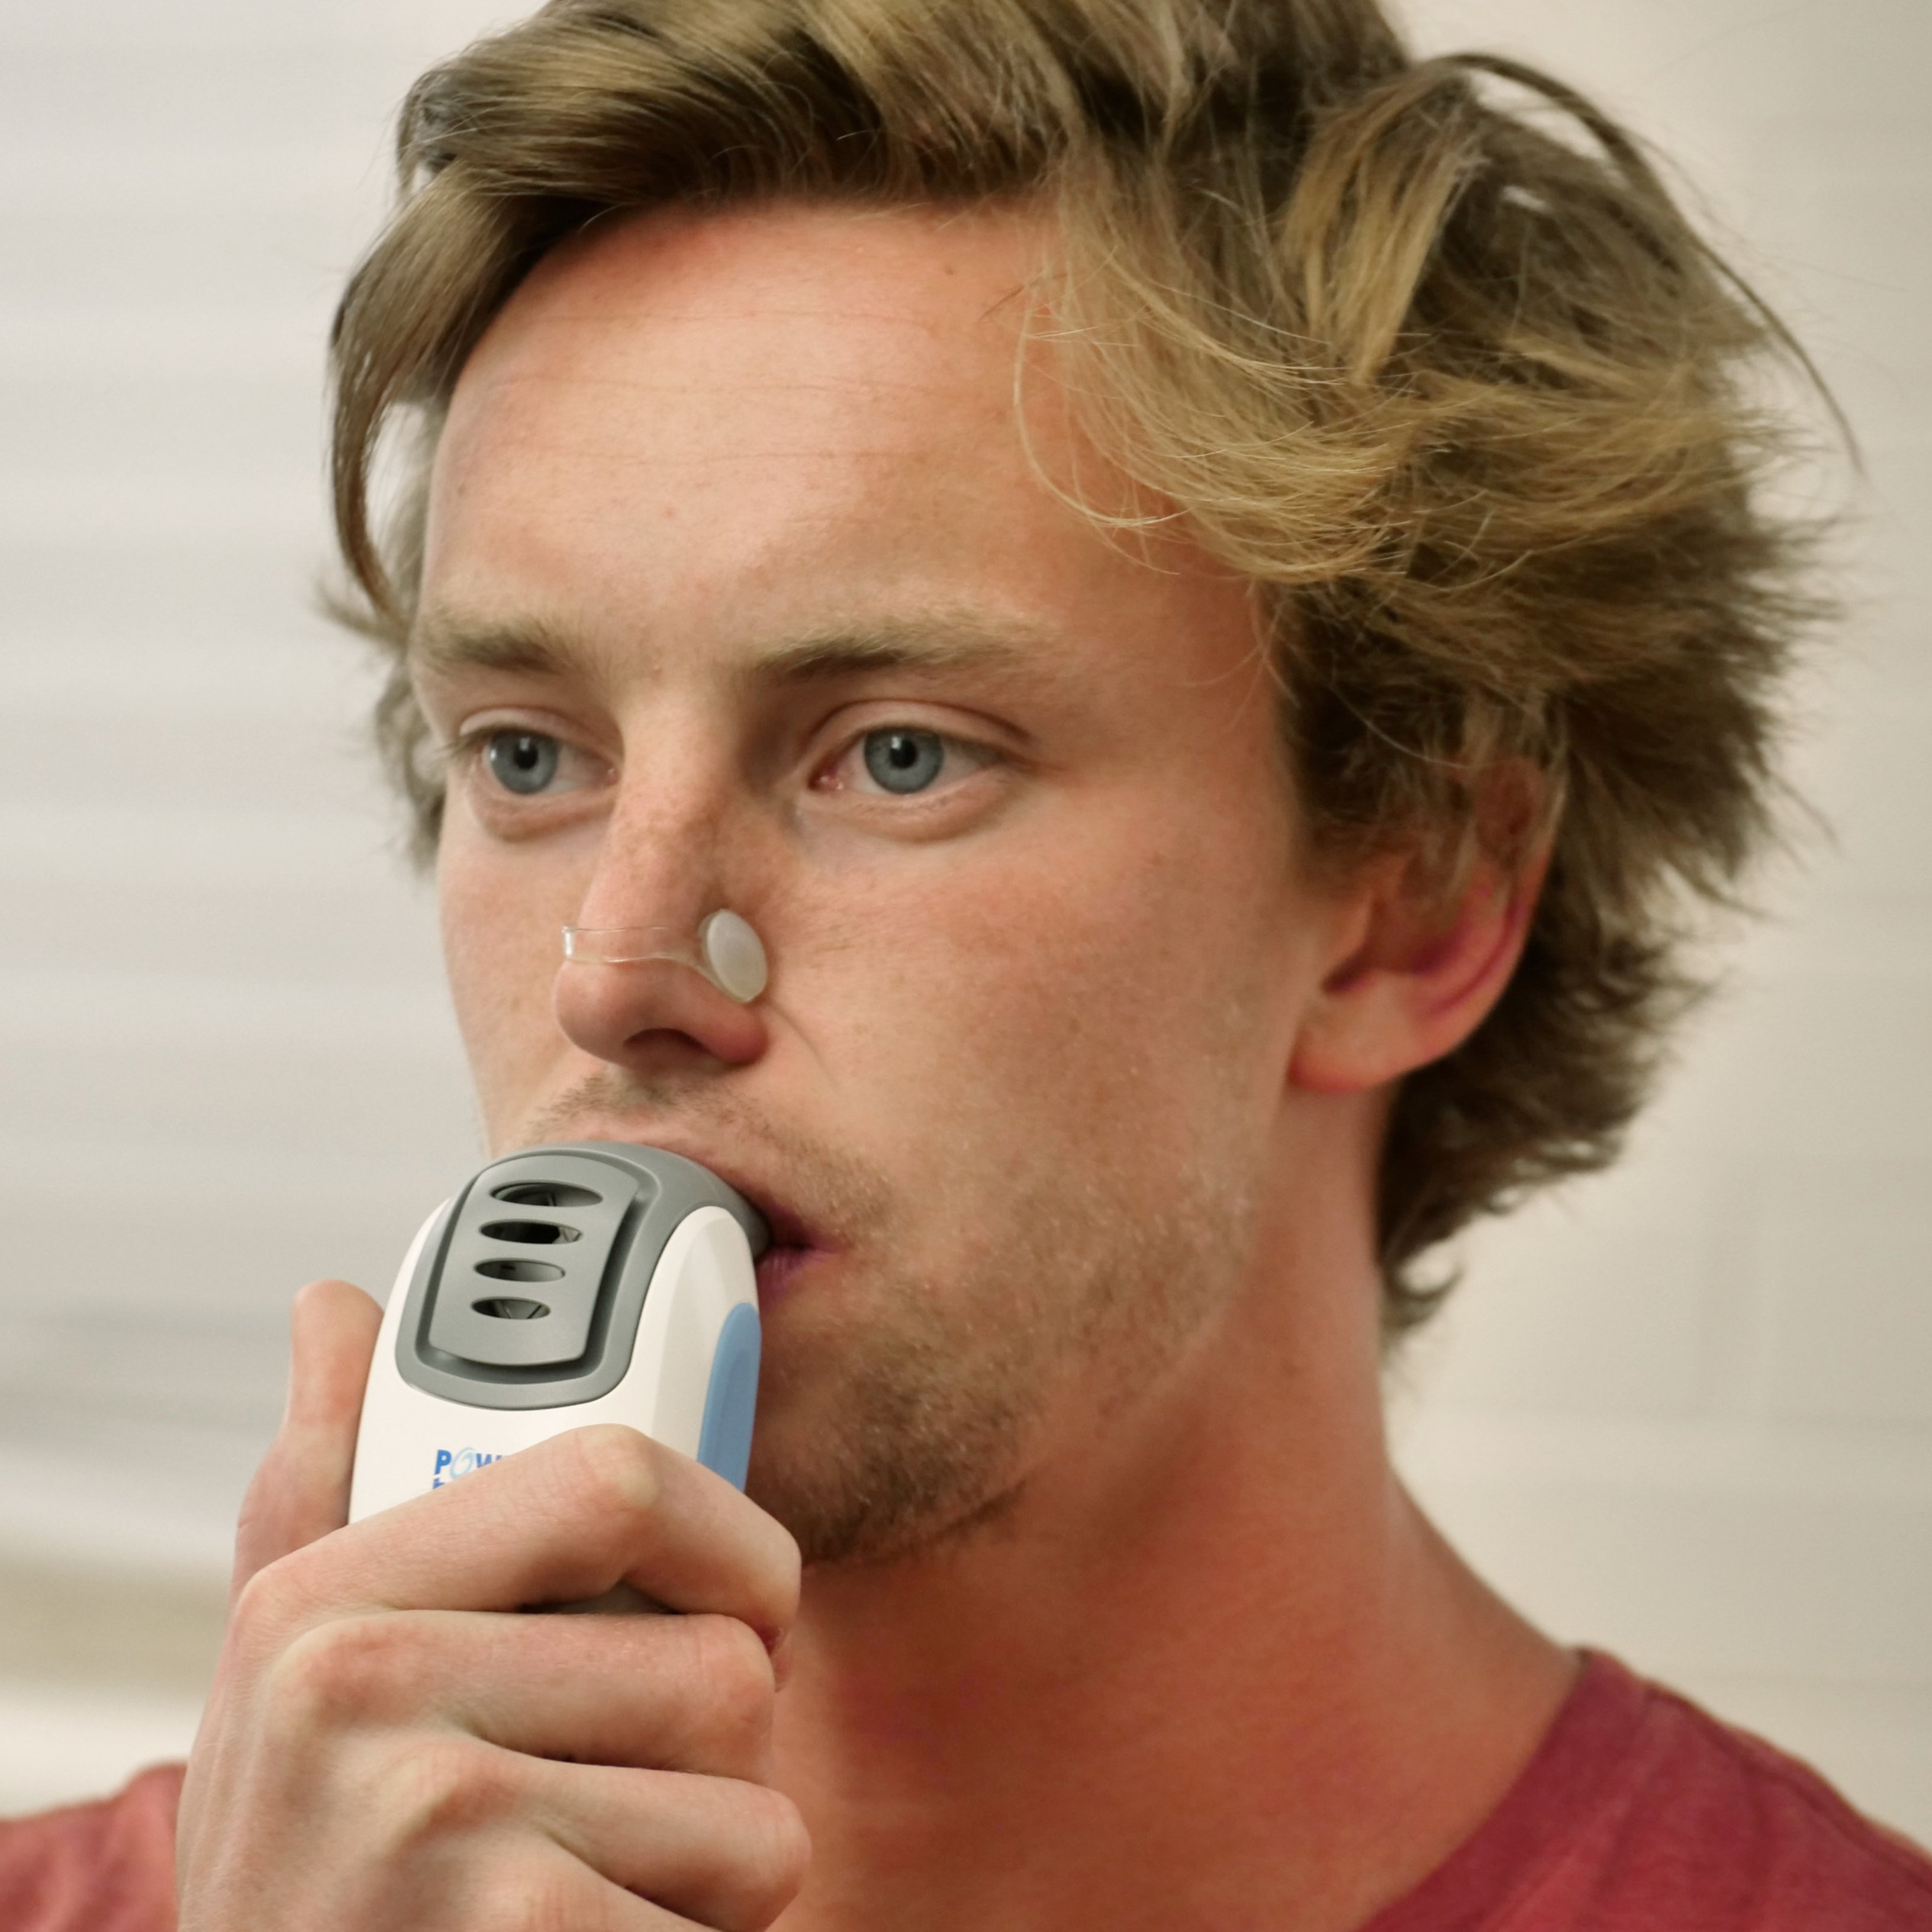 IMST, la nueva técnica respiratoria que mejora de forma significativa tu salud